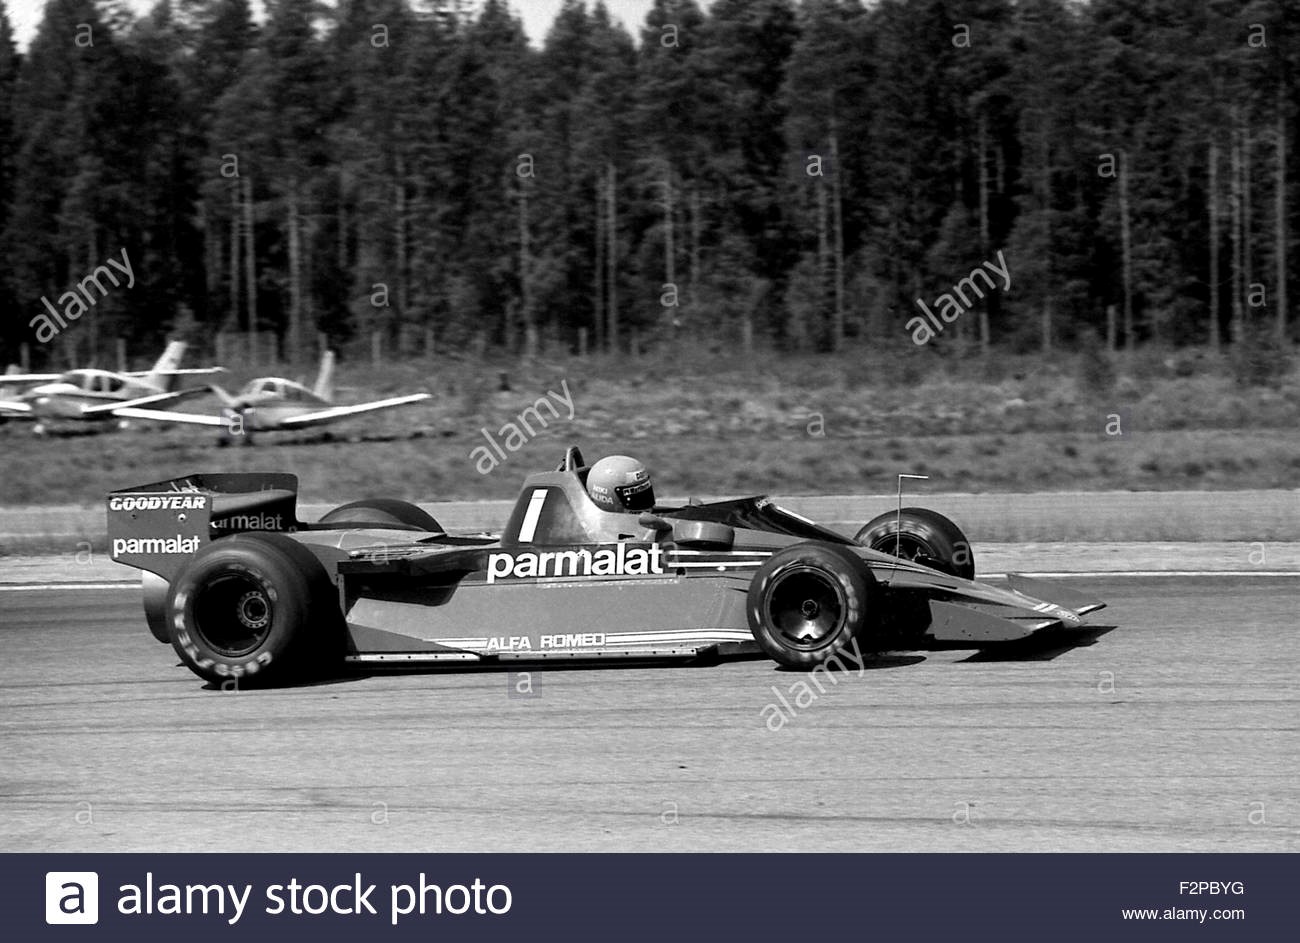 Niki Lauda in an Alfa Romeo Brabham fan-car at the Swedish GP in 1978.